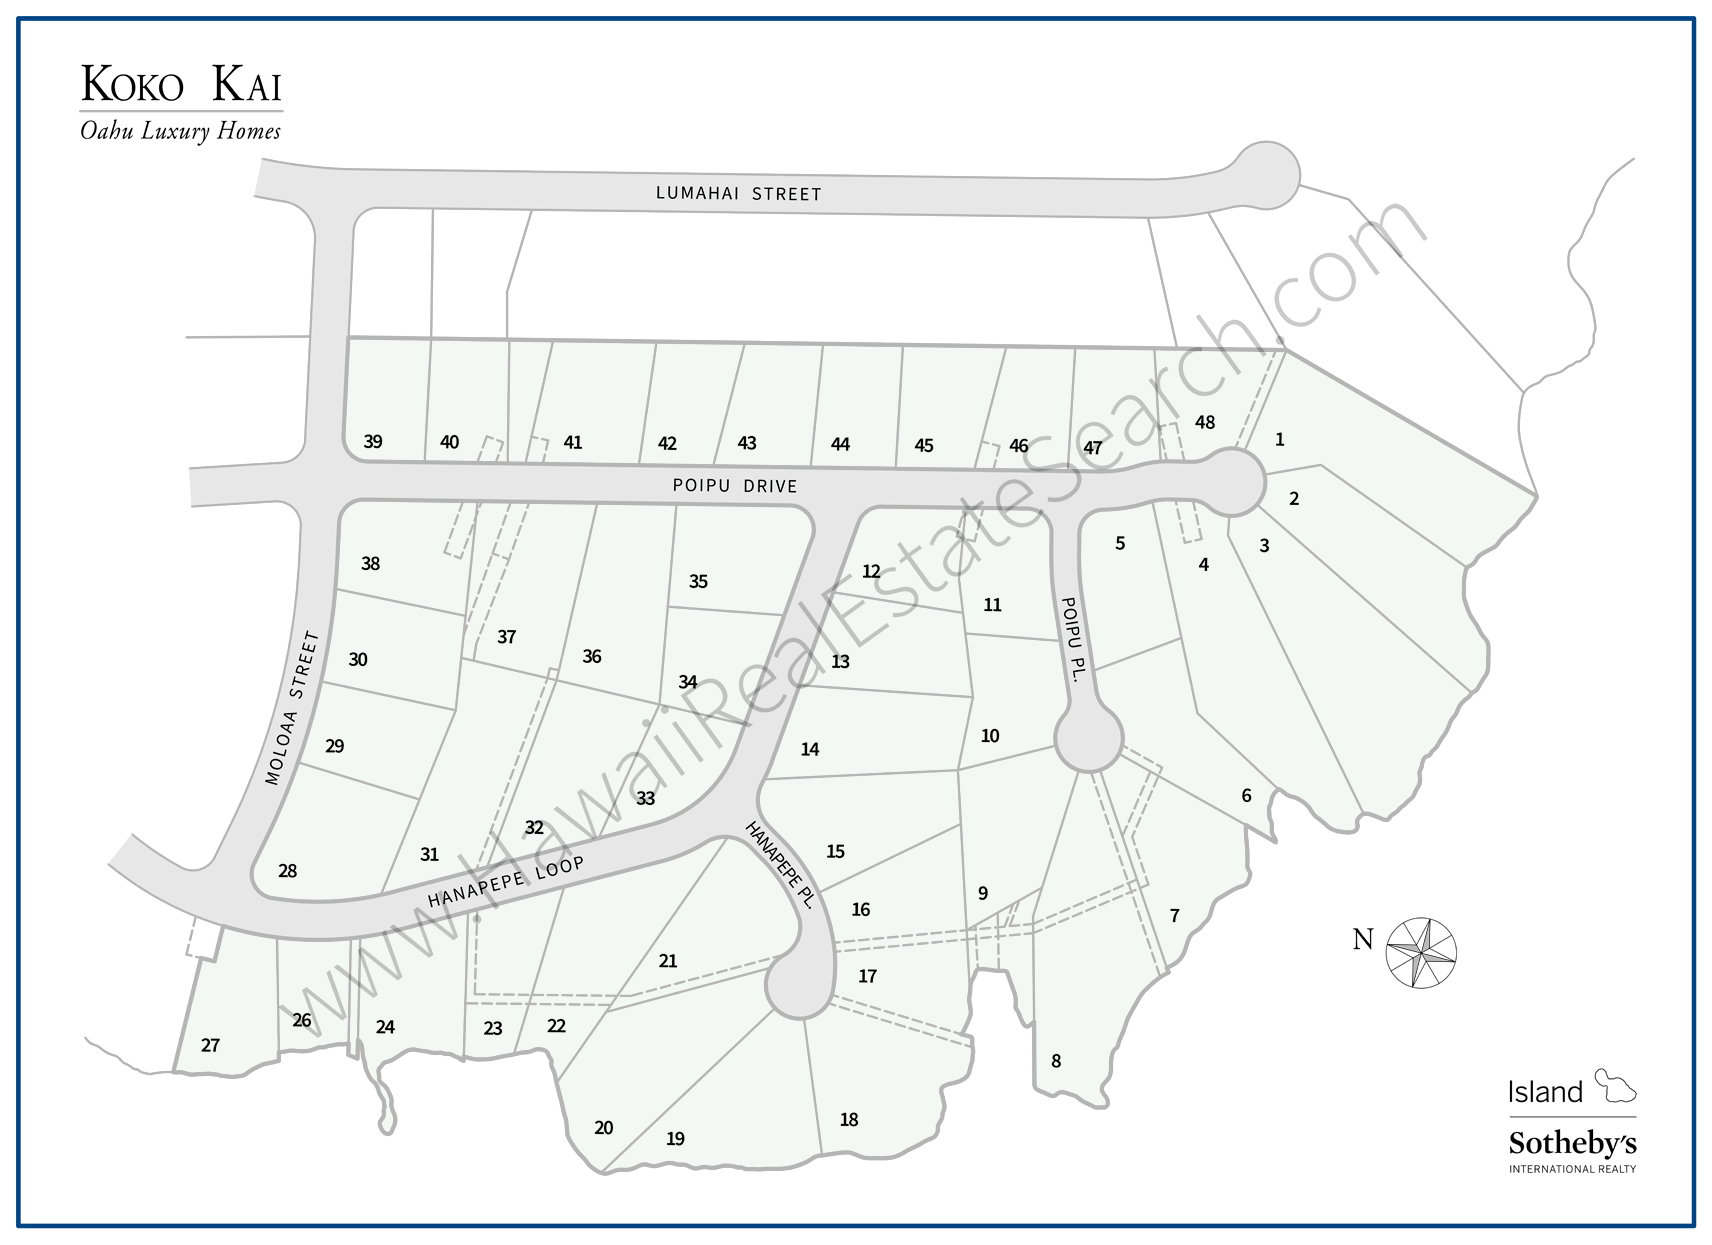 Koko Kai Plat Map